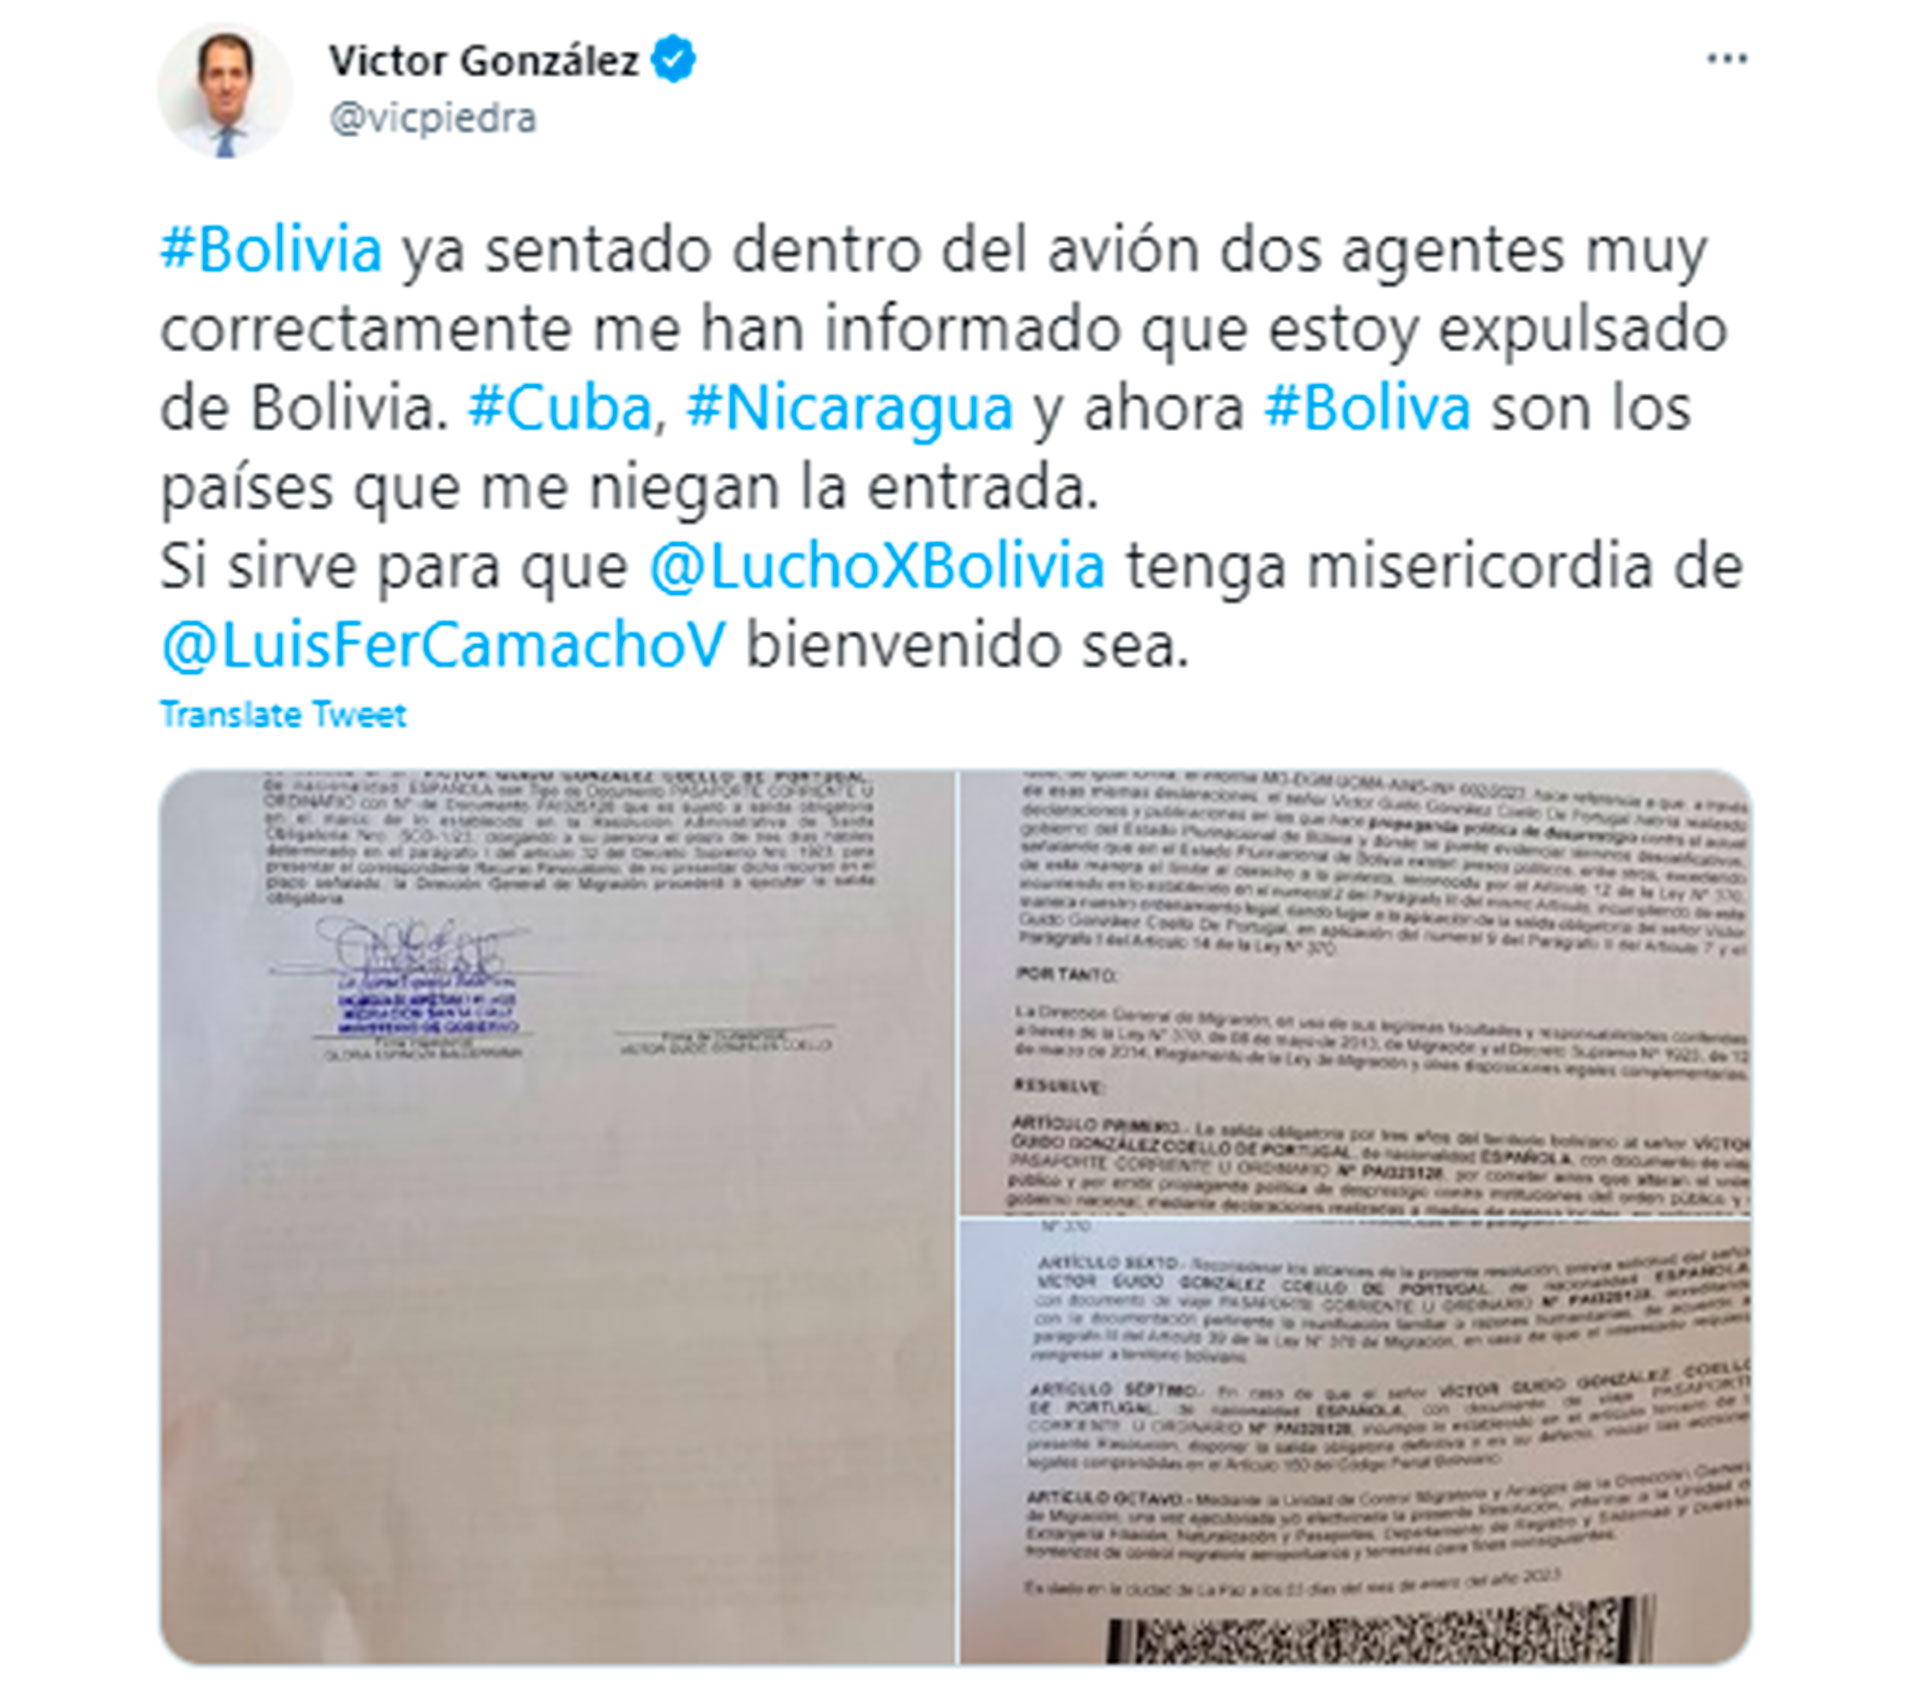 El mensaje de González en Twitter